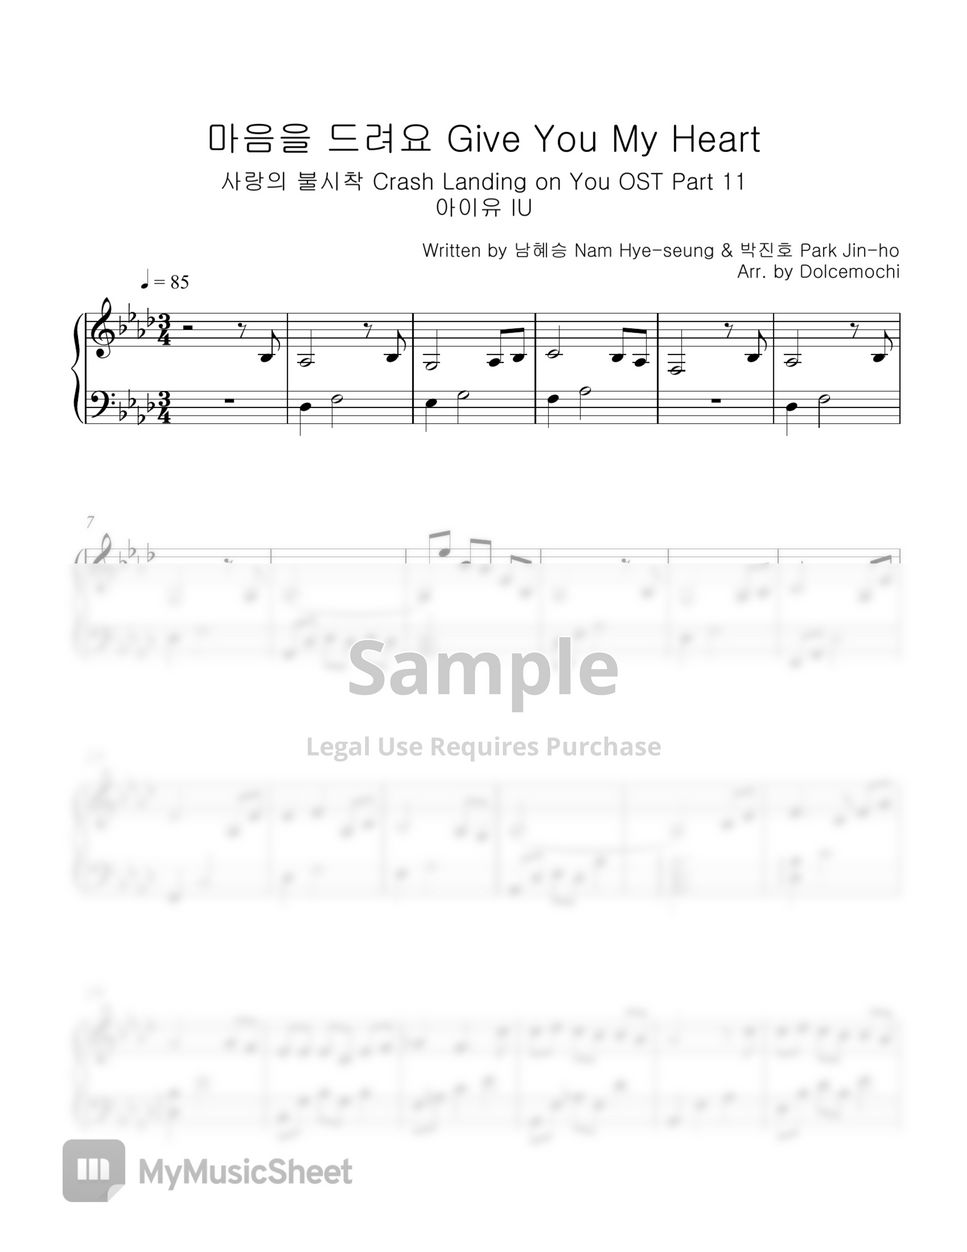 [Crash Landing on You 사랑의 불시착] OST Part 11 - IU (아이유) - Give You My Heart 마음을 드려요  - by Dolcemochi